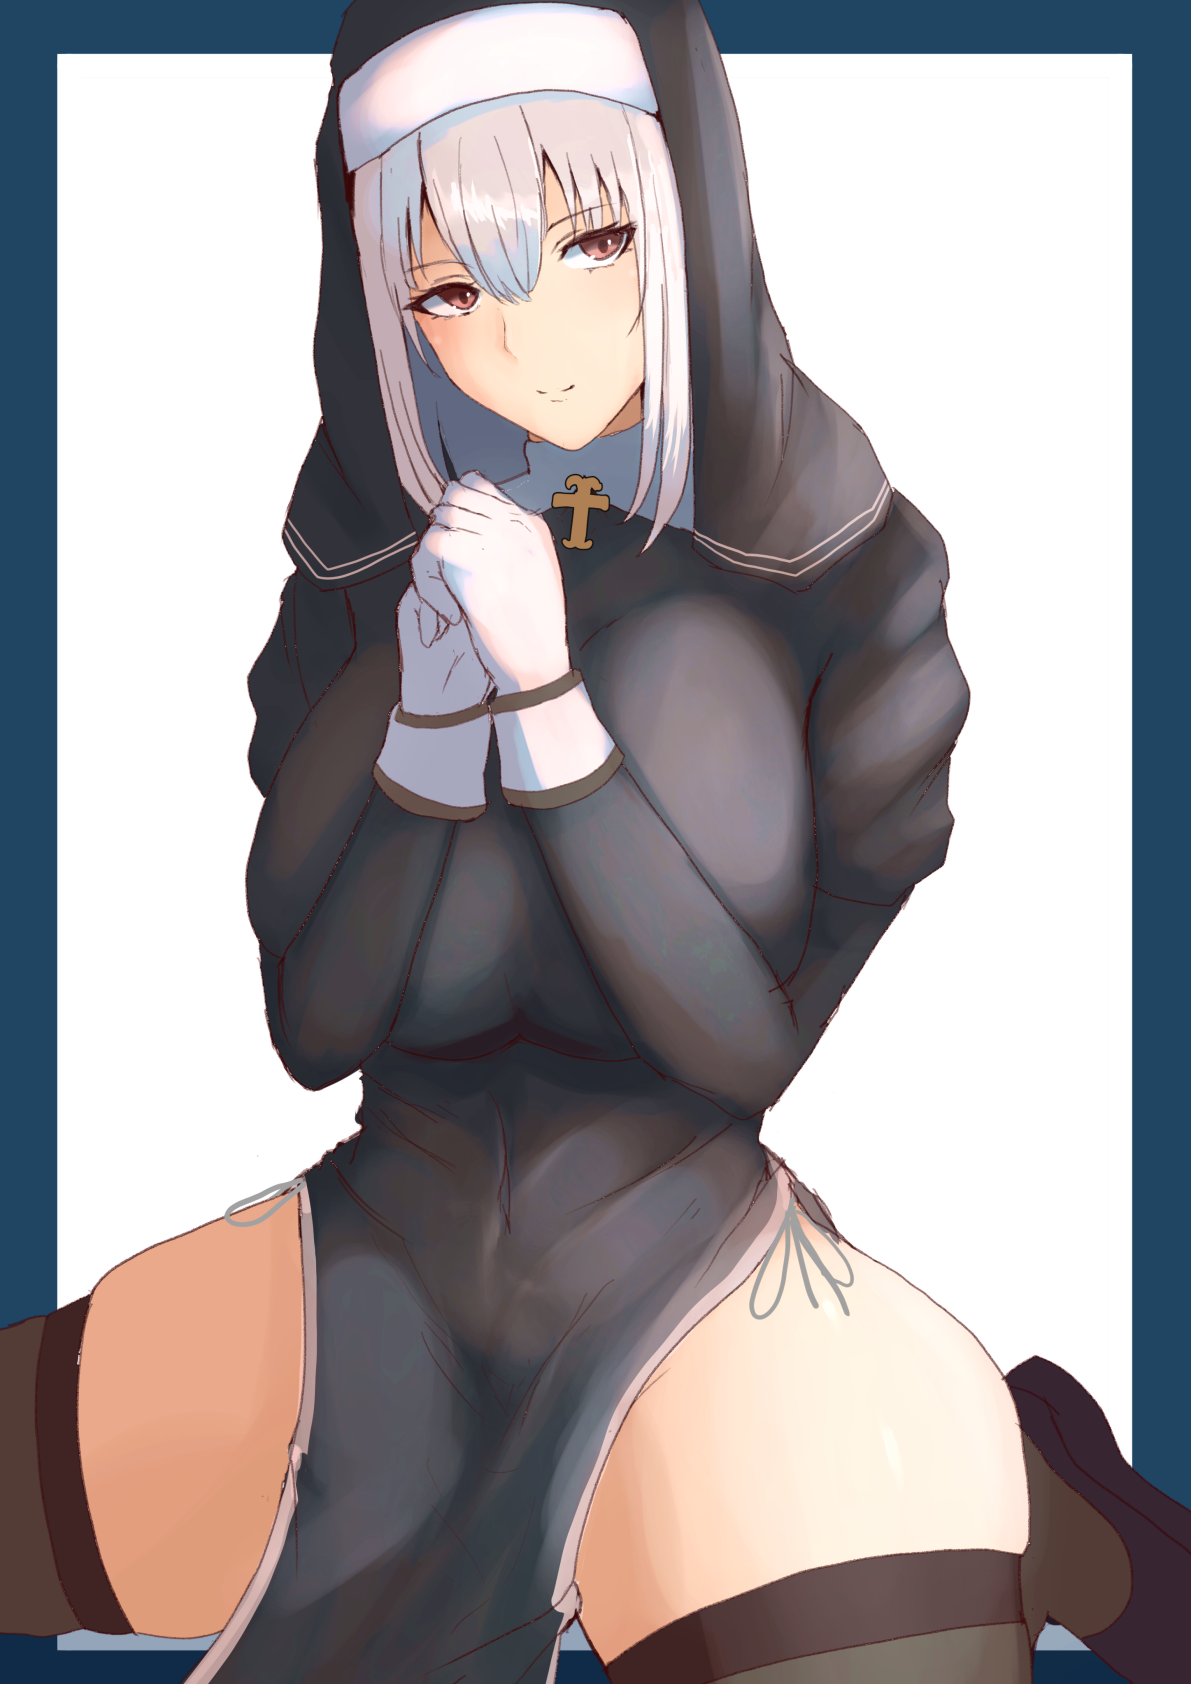 Anime 1191x1684 anime anime girls original characters solo artwork digital art fan art thighs nuns nun outfit